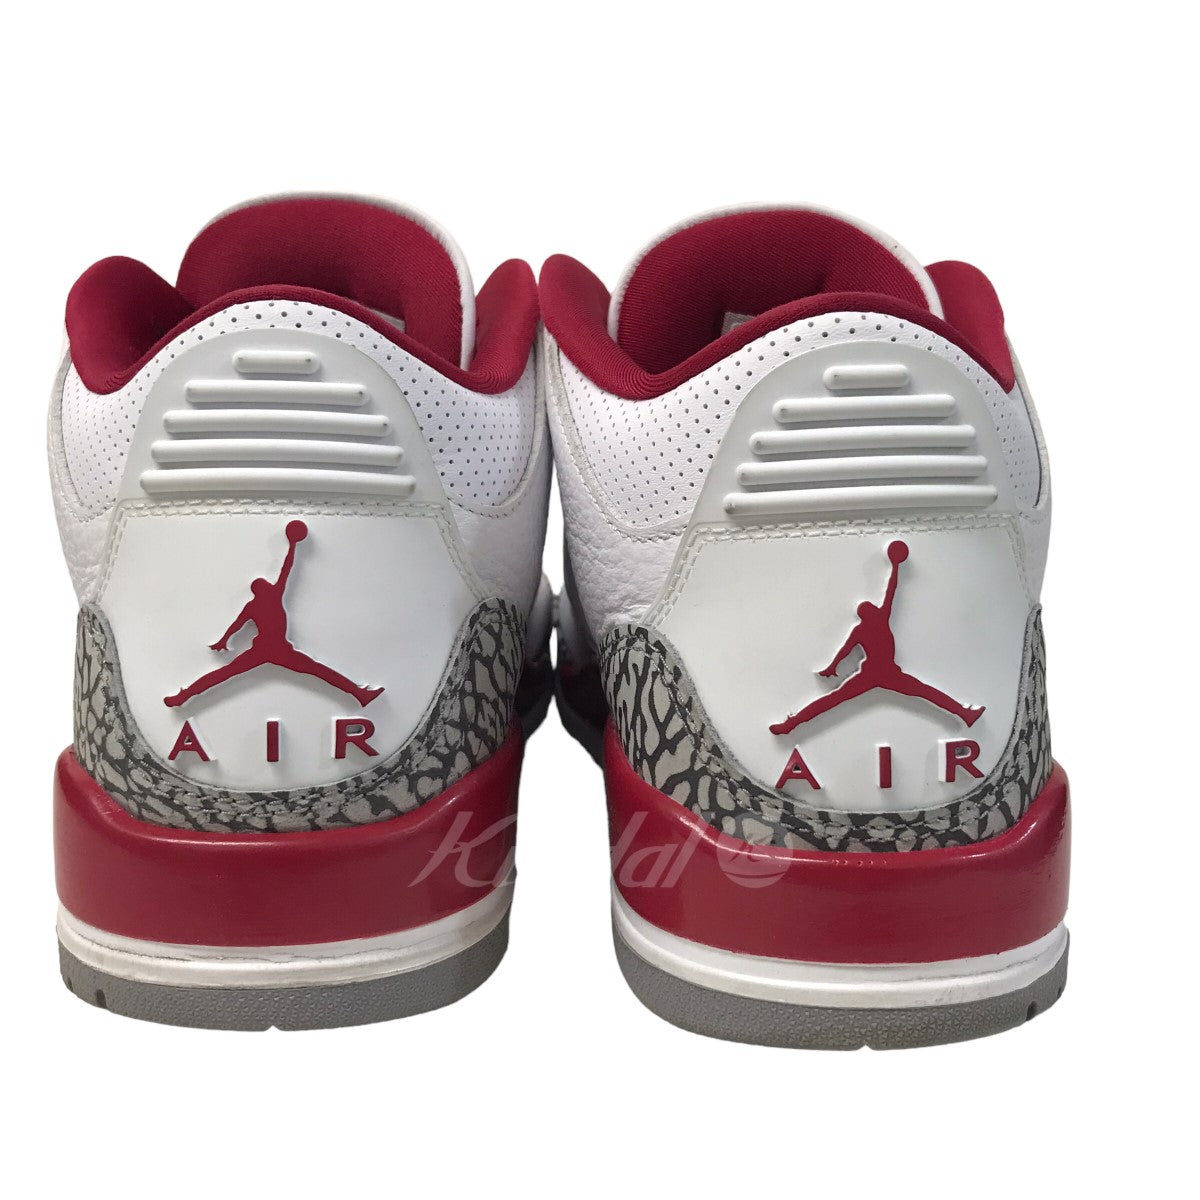 NIKE(ナイキ) 「Nike Air Jordan 3 Cardinal Red」ローカット ...